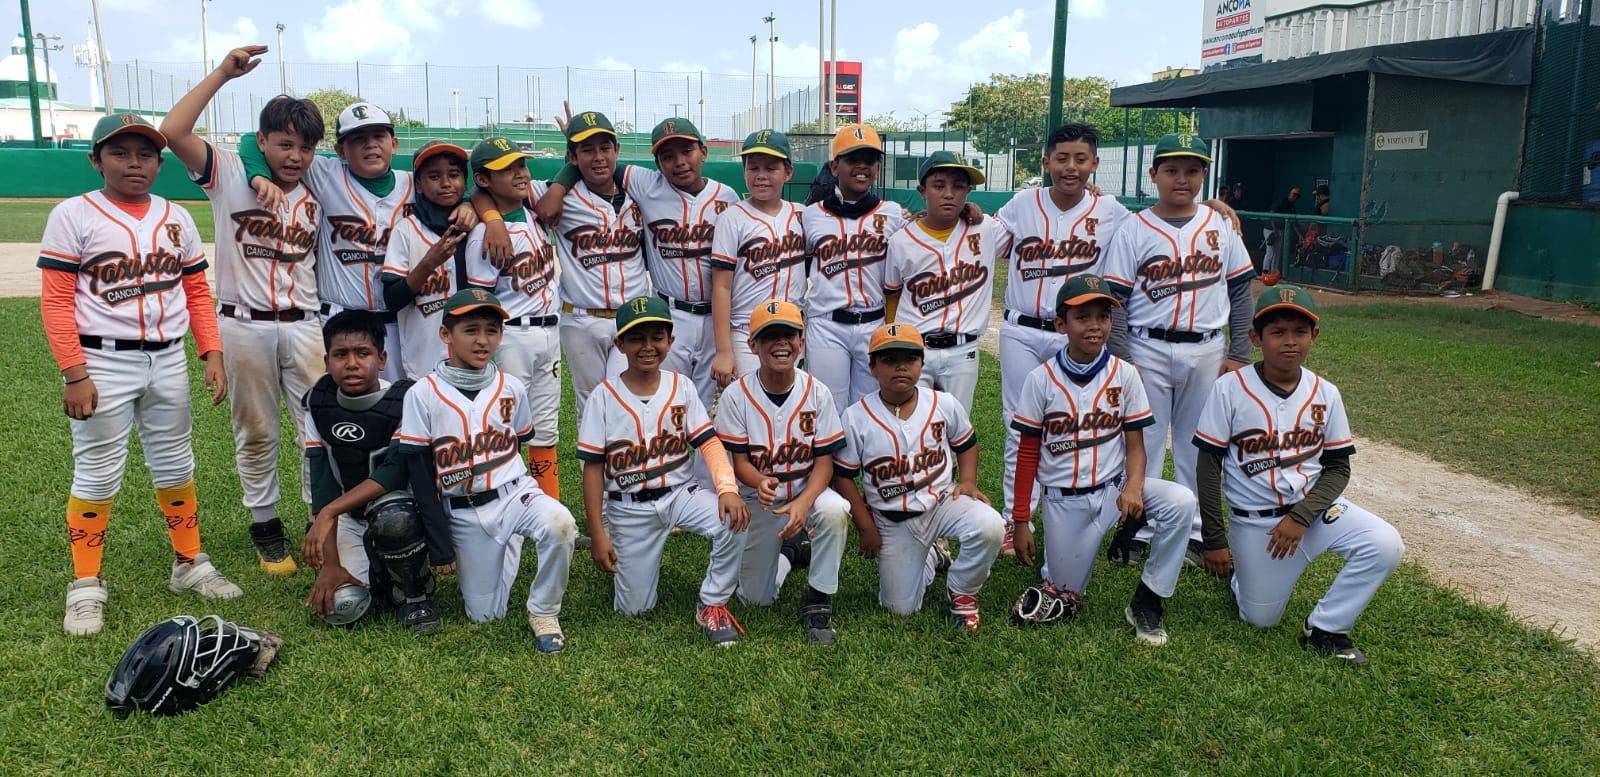 Club Taxistas consigue tres victorias en la Liga de Béisbol Infantil en Cancún